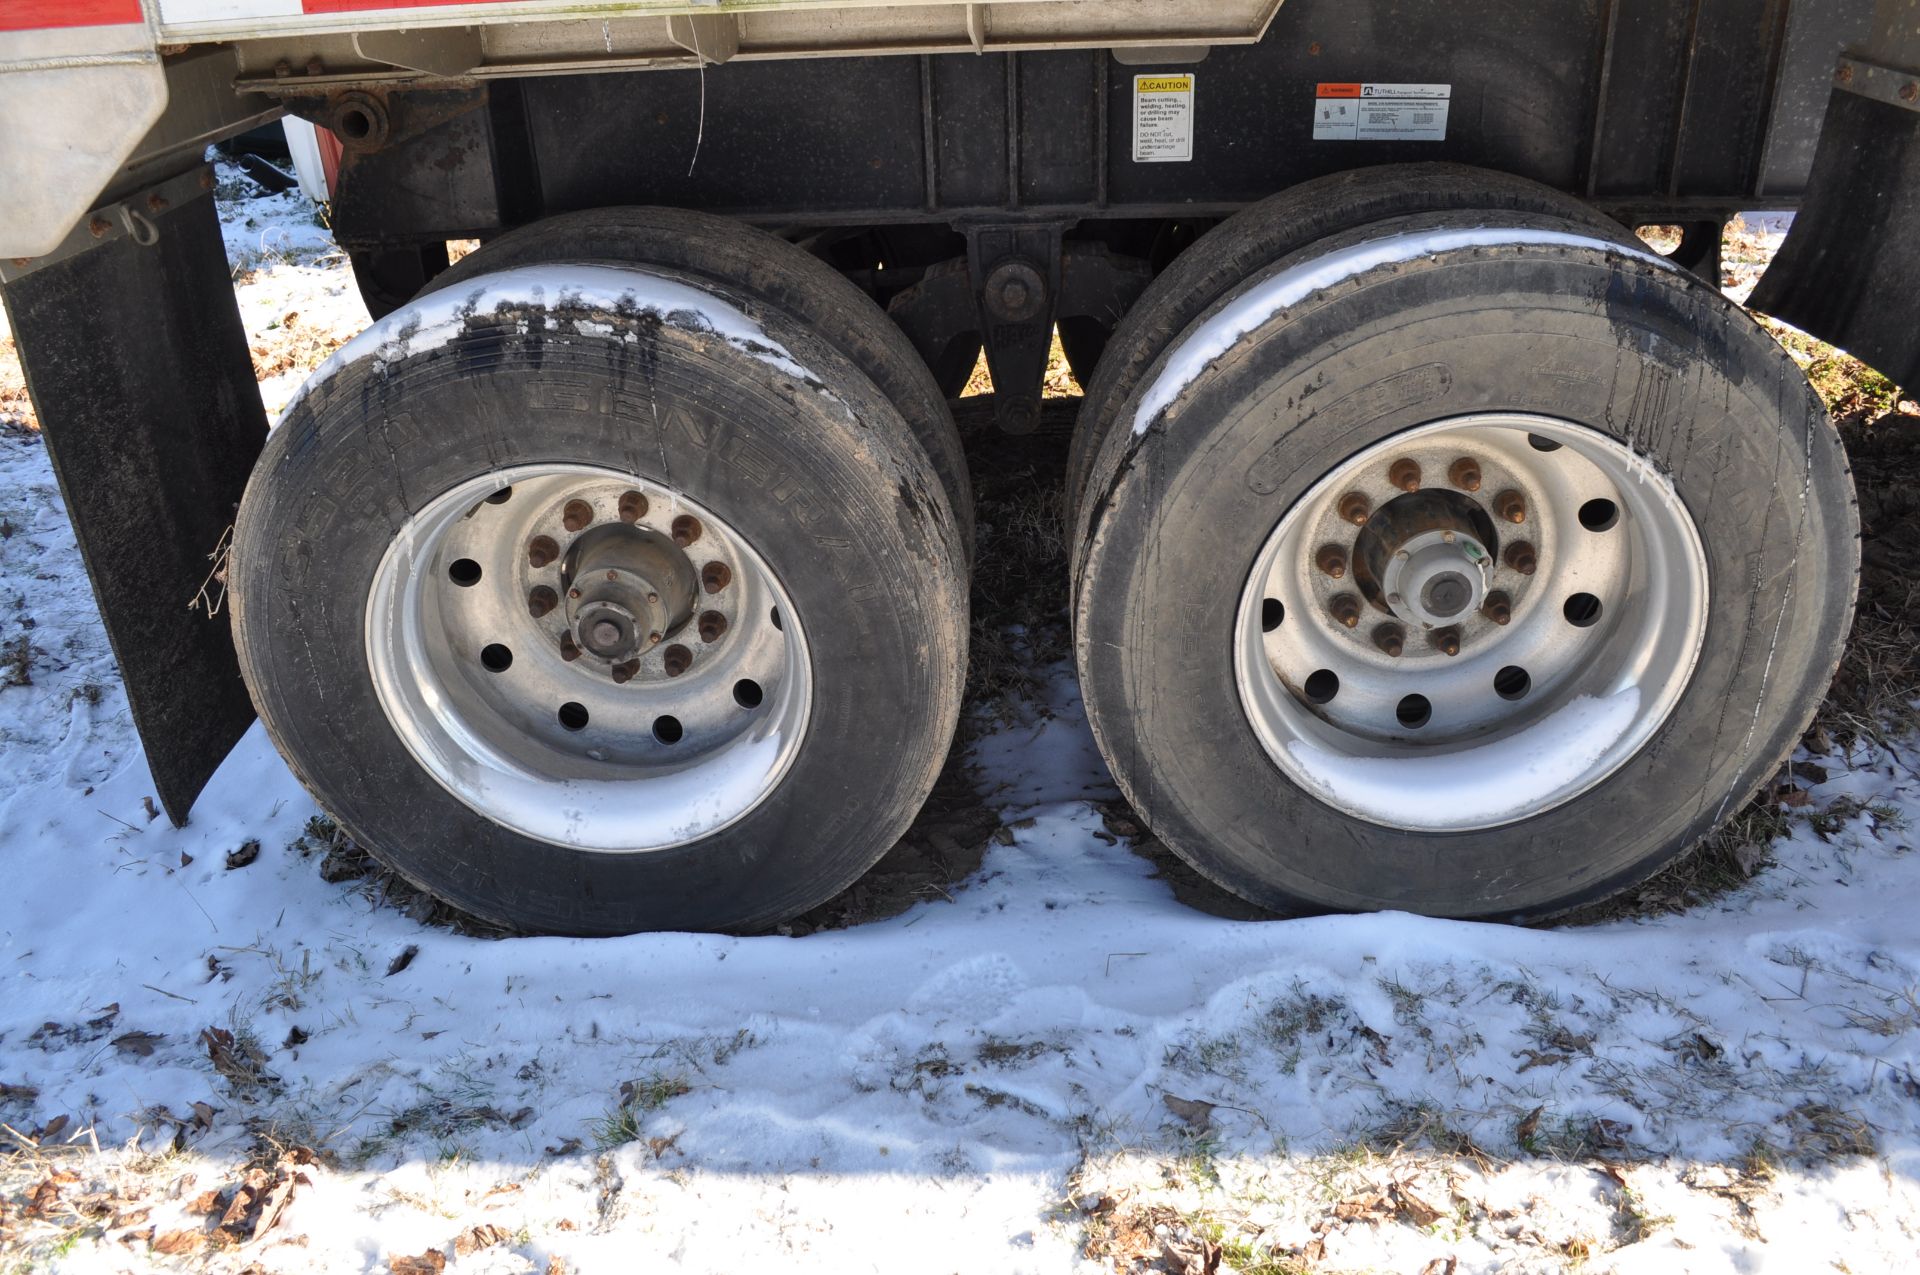 2007 East 33’alum dump trailer, steel frame, spring ride, 11R24.5 tires, coal chute, roll tarp - Image 11 of 14